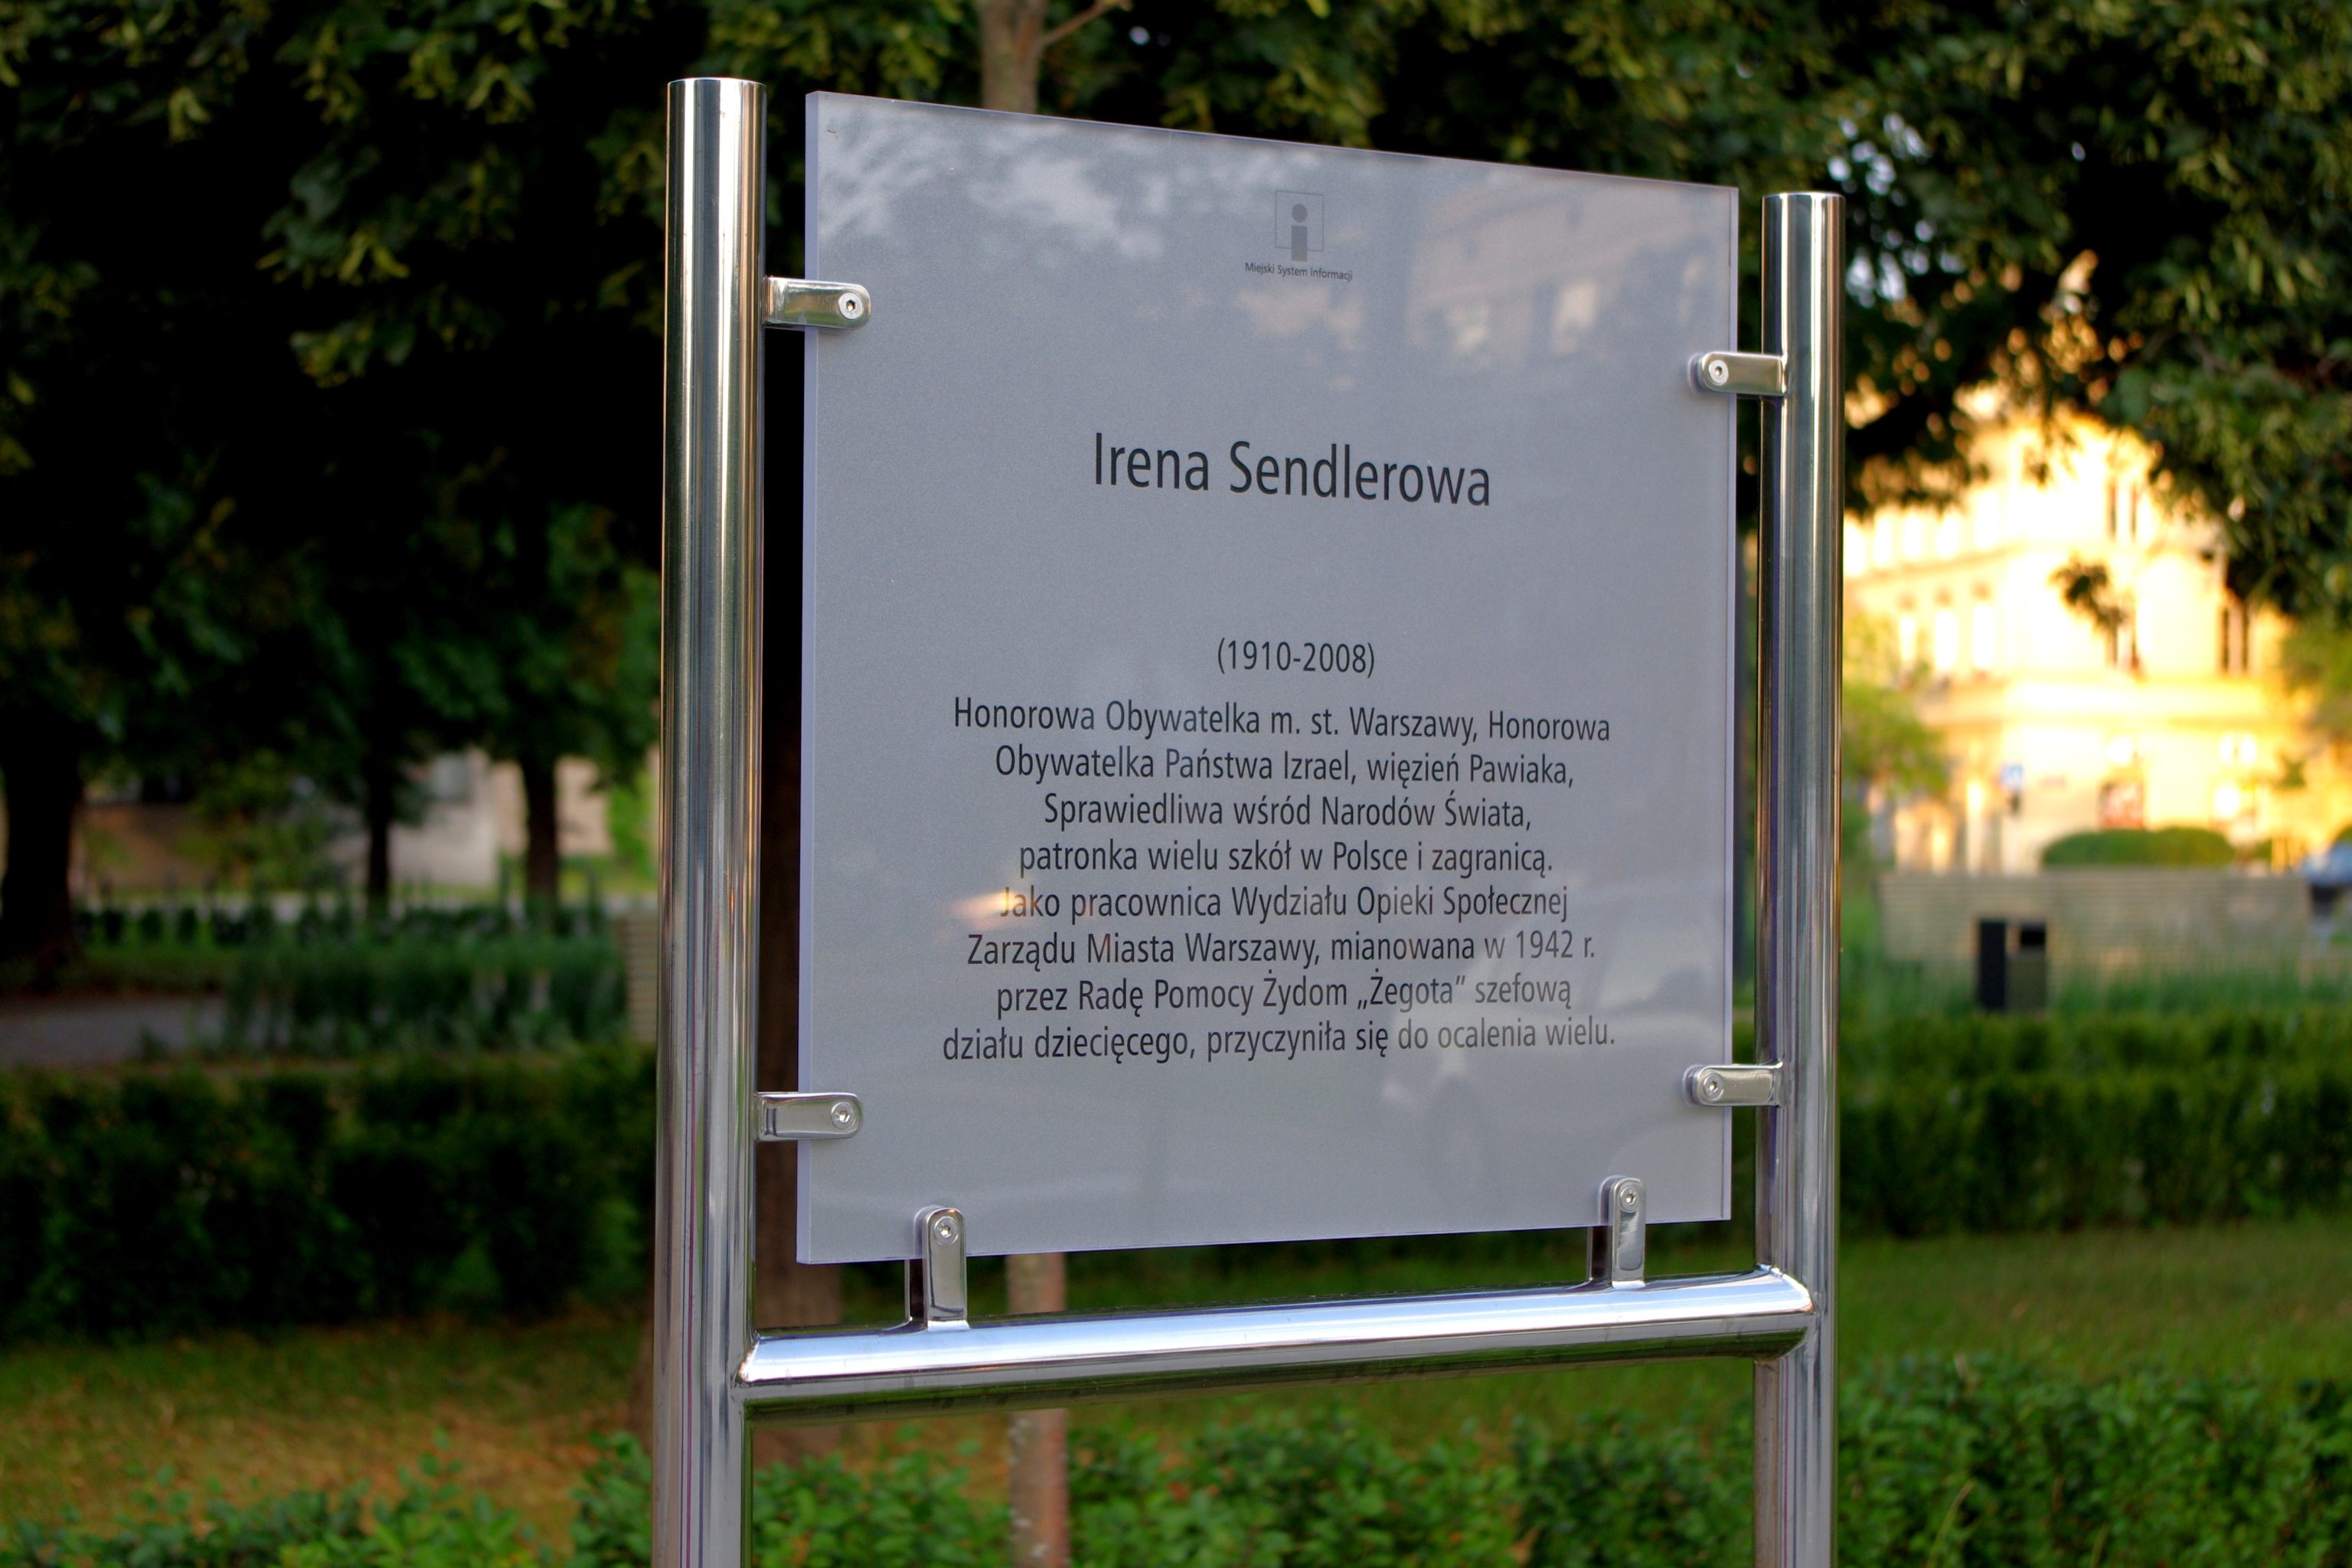 Wikipedia, Information boards in Warsaw (City Information System), Irena Sendlerowa, Self-published 